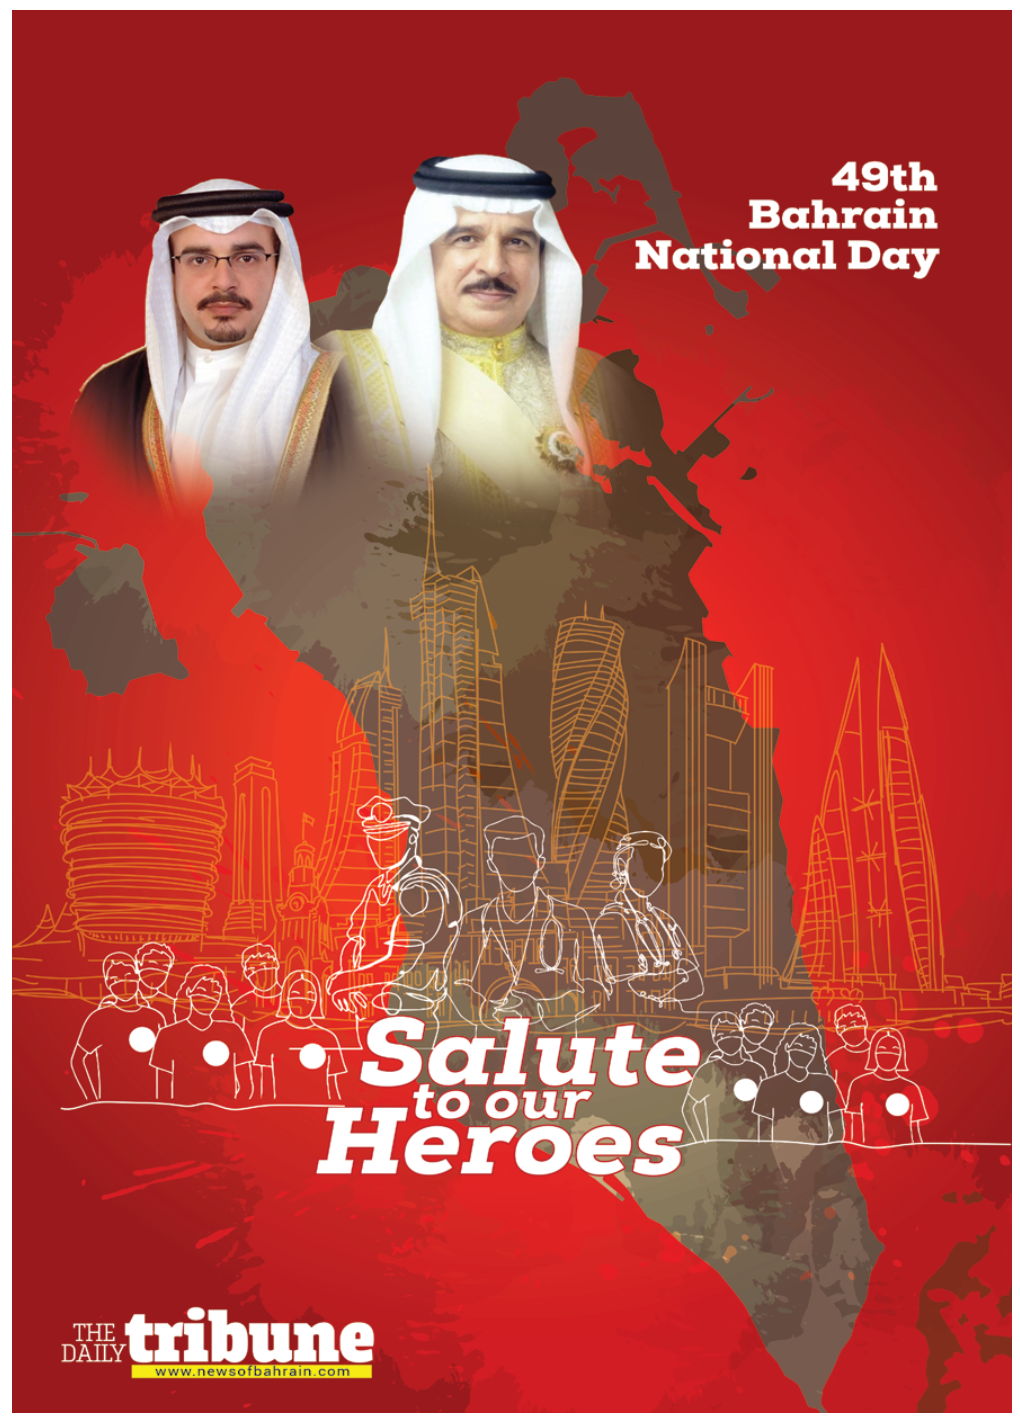 49Th BAHRAIN NATIONAL DAY